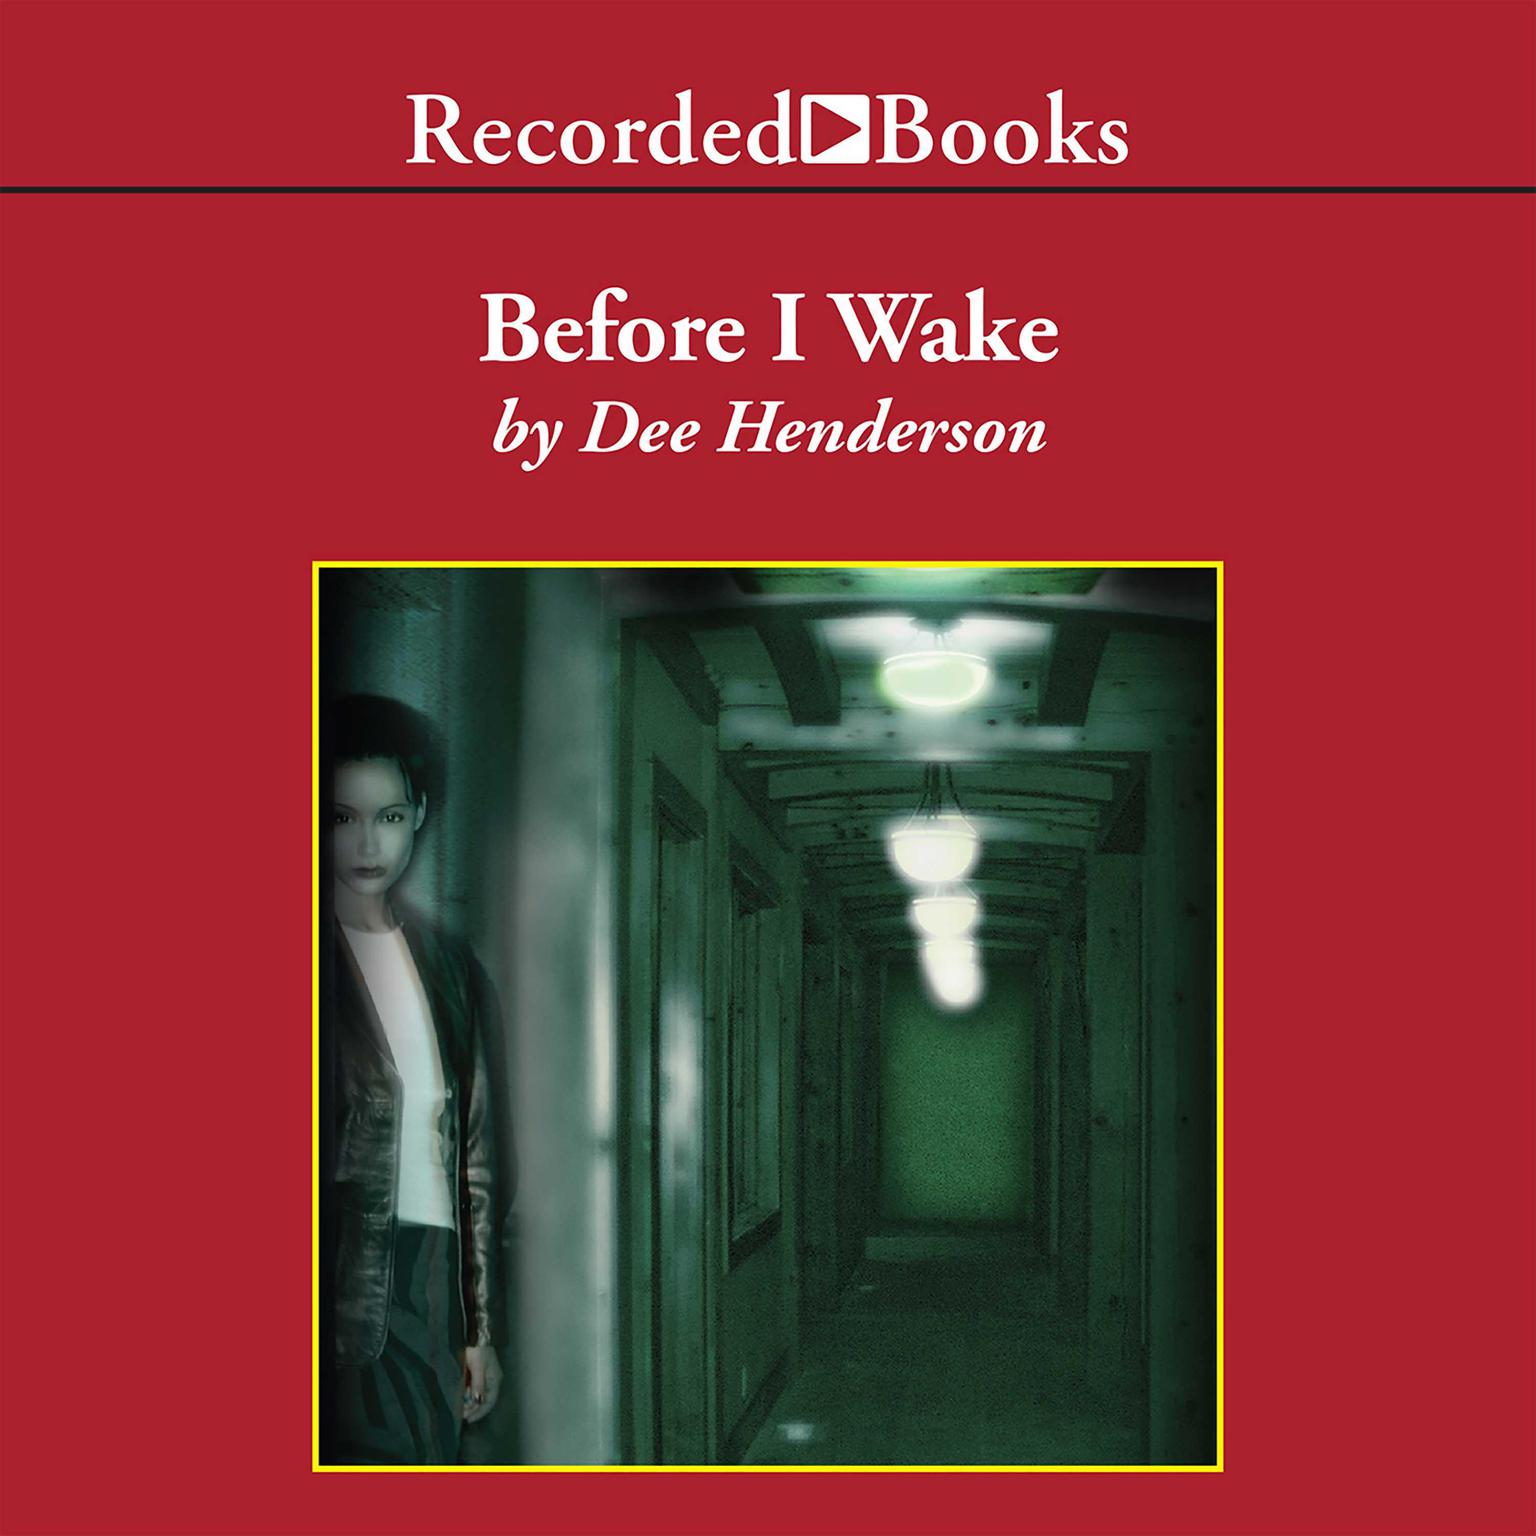 Before I Wake Audiobook, by Dee Henderson